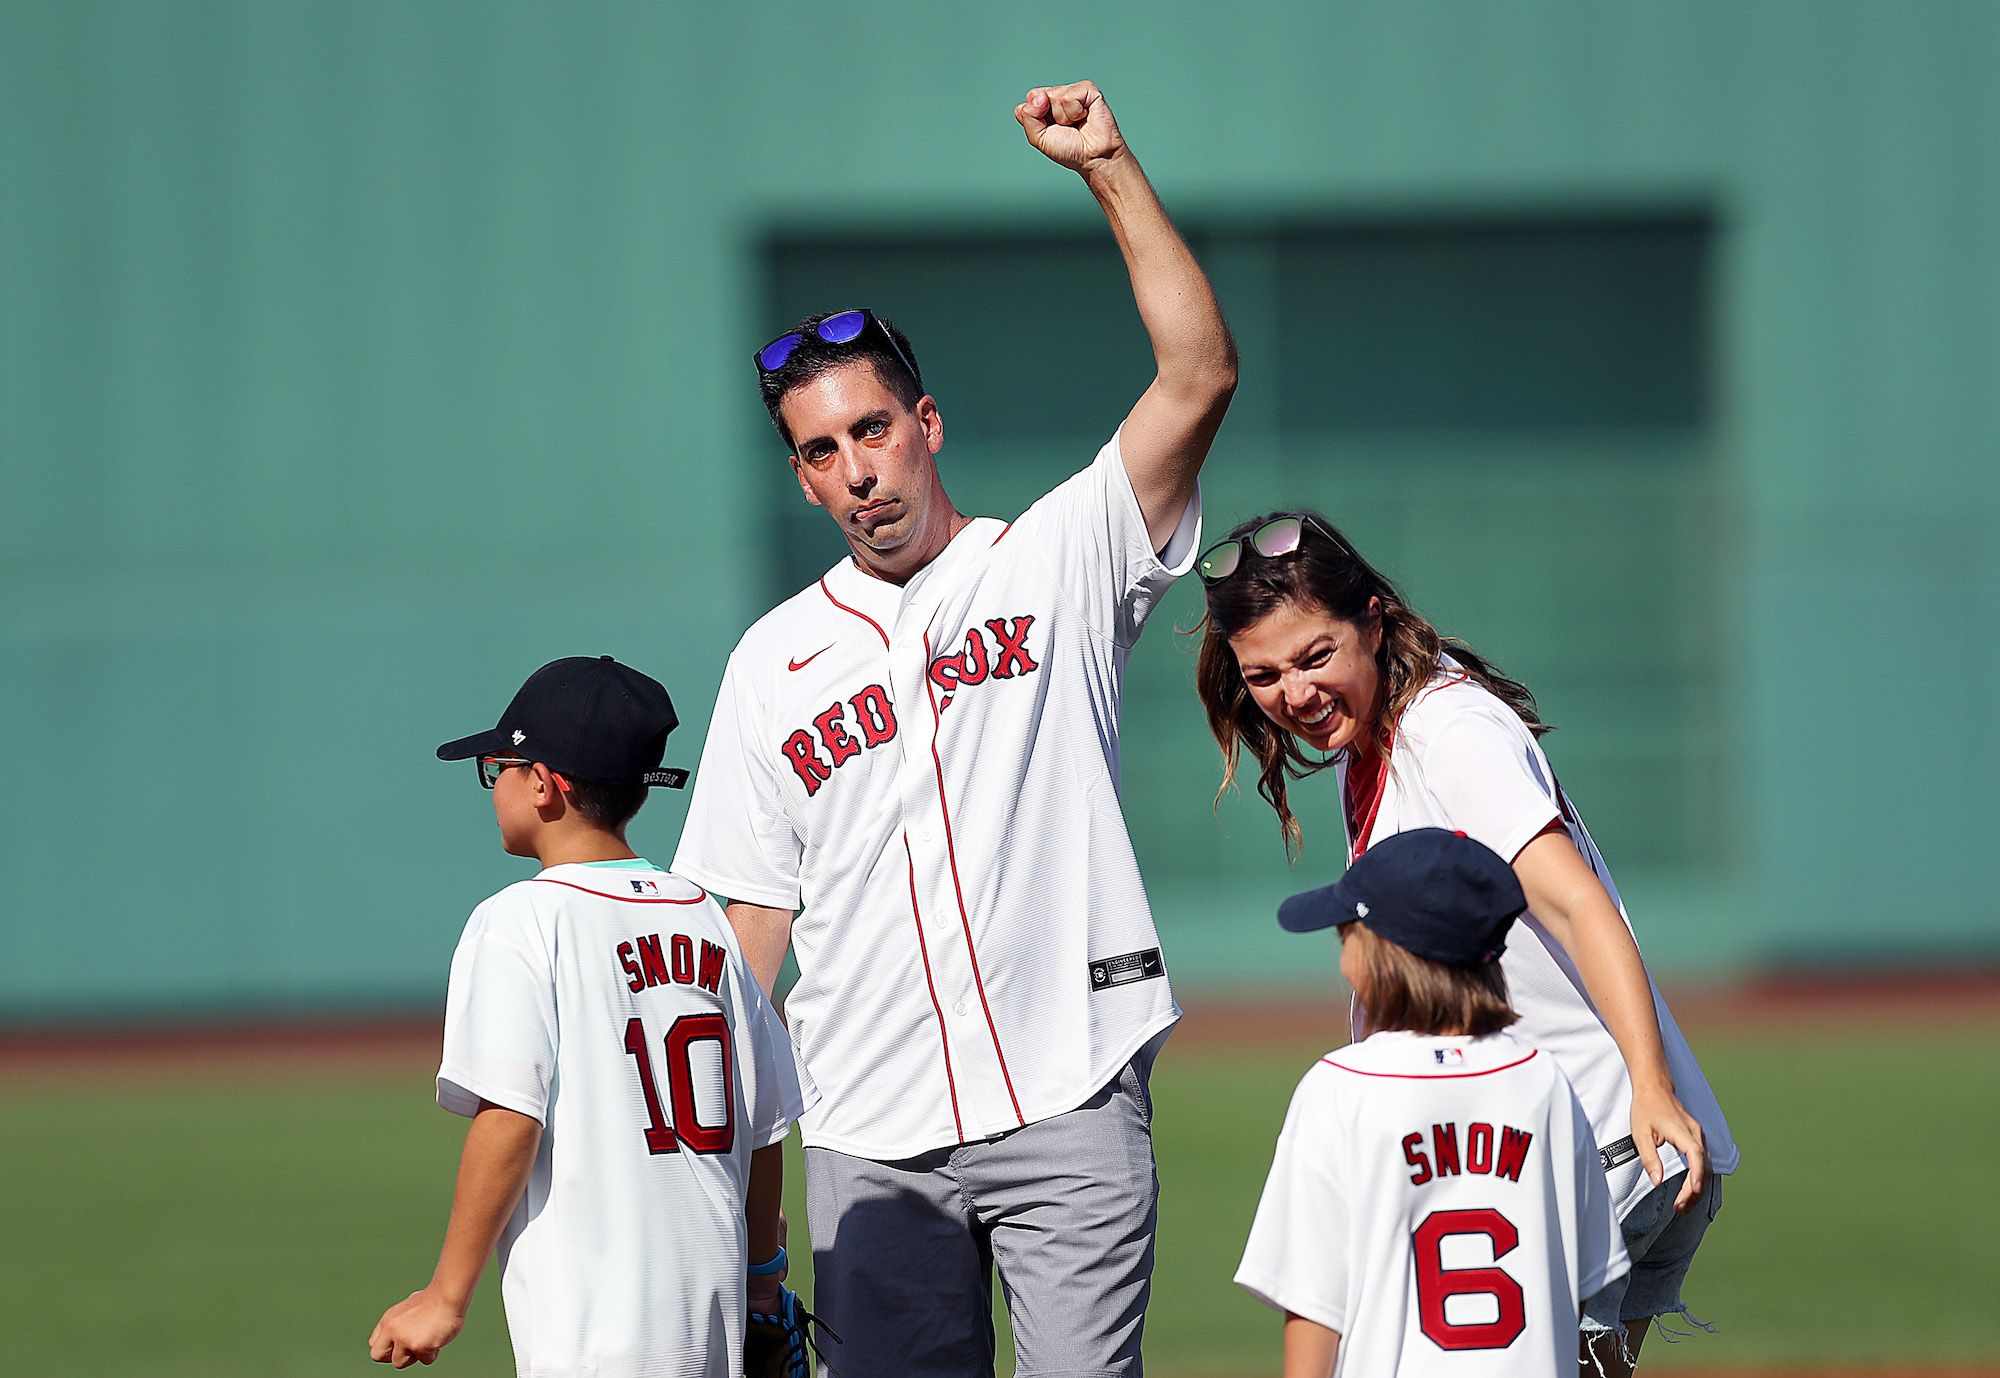 2021 Boston Red Sox Uniform Tracker, Sports